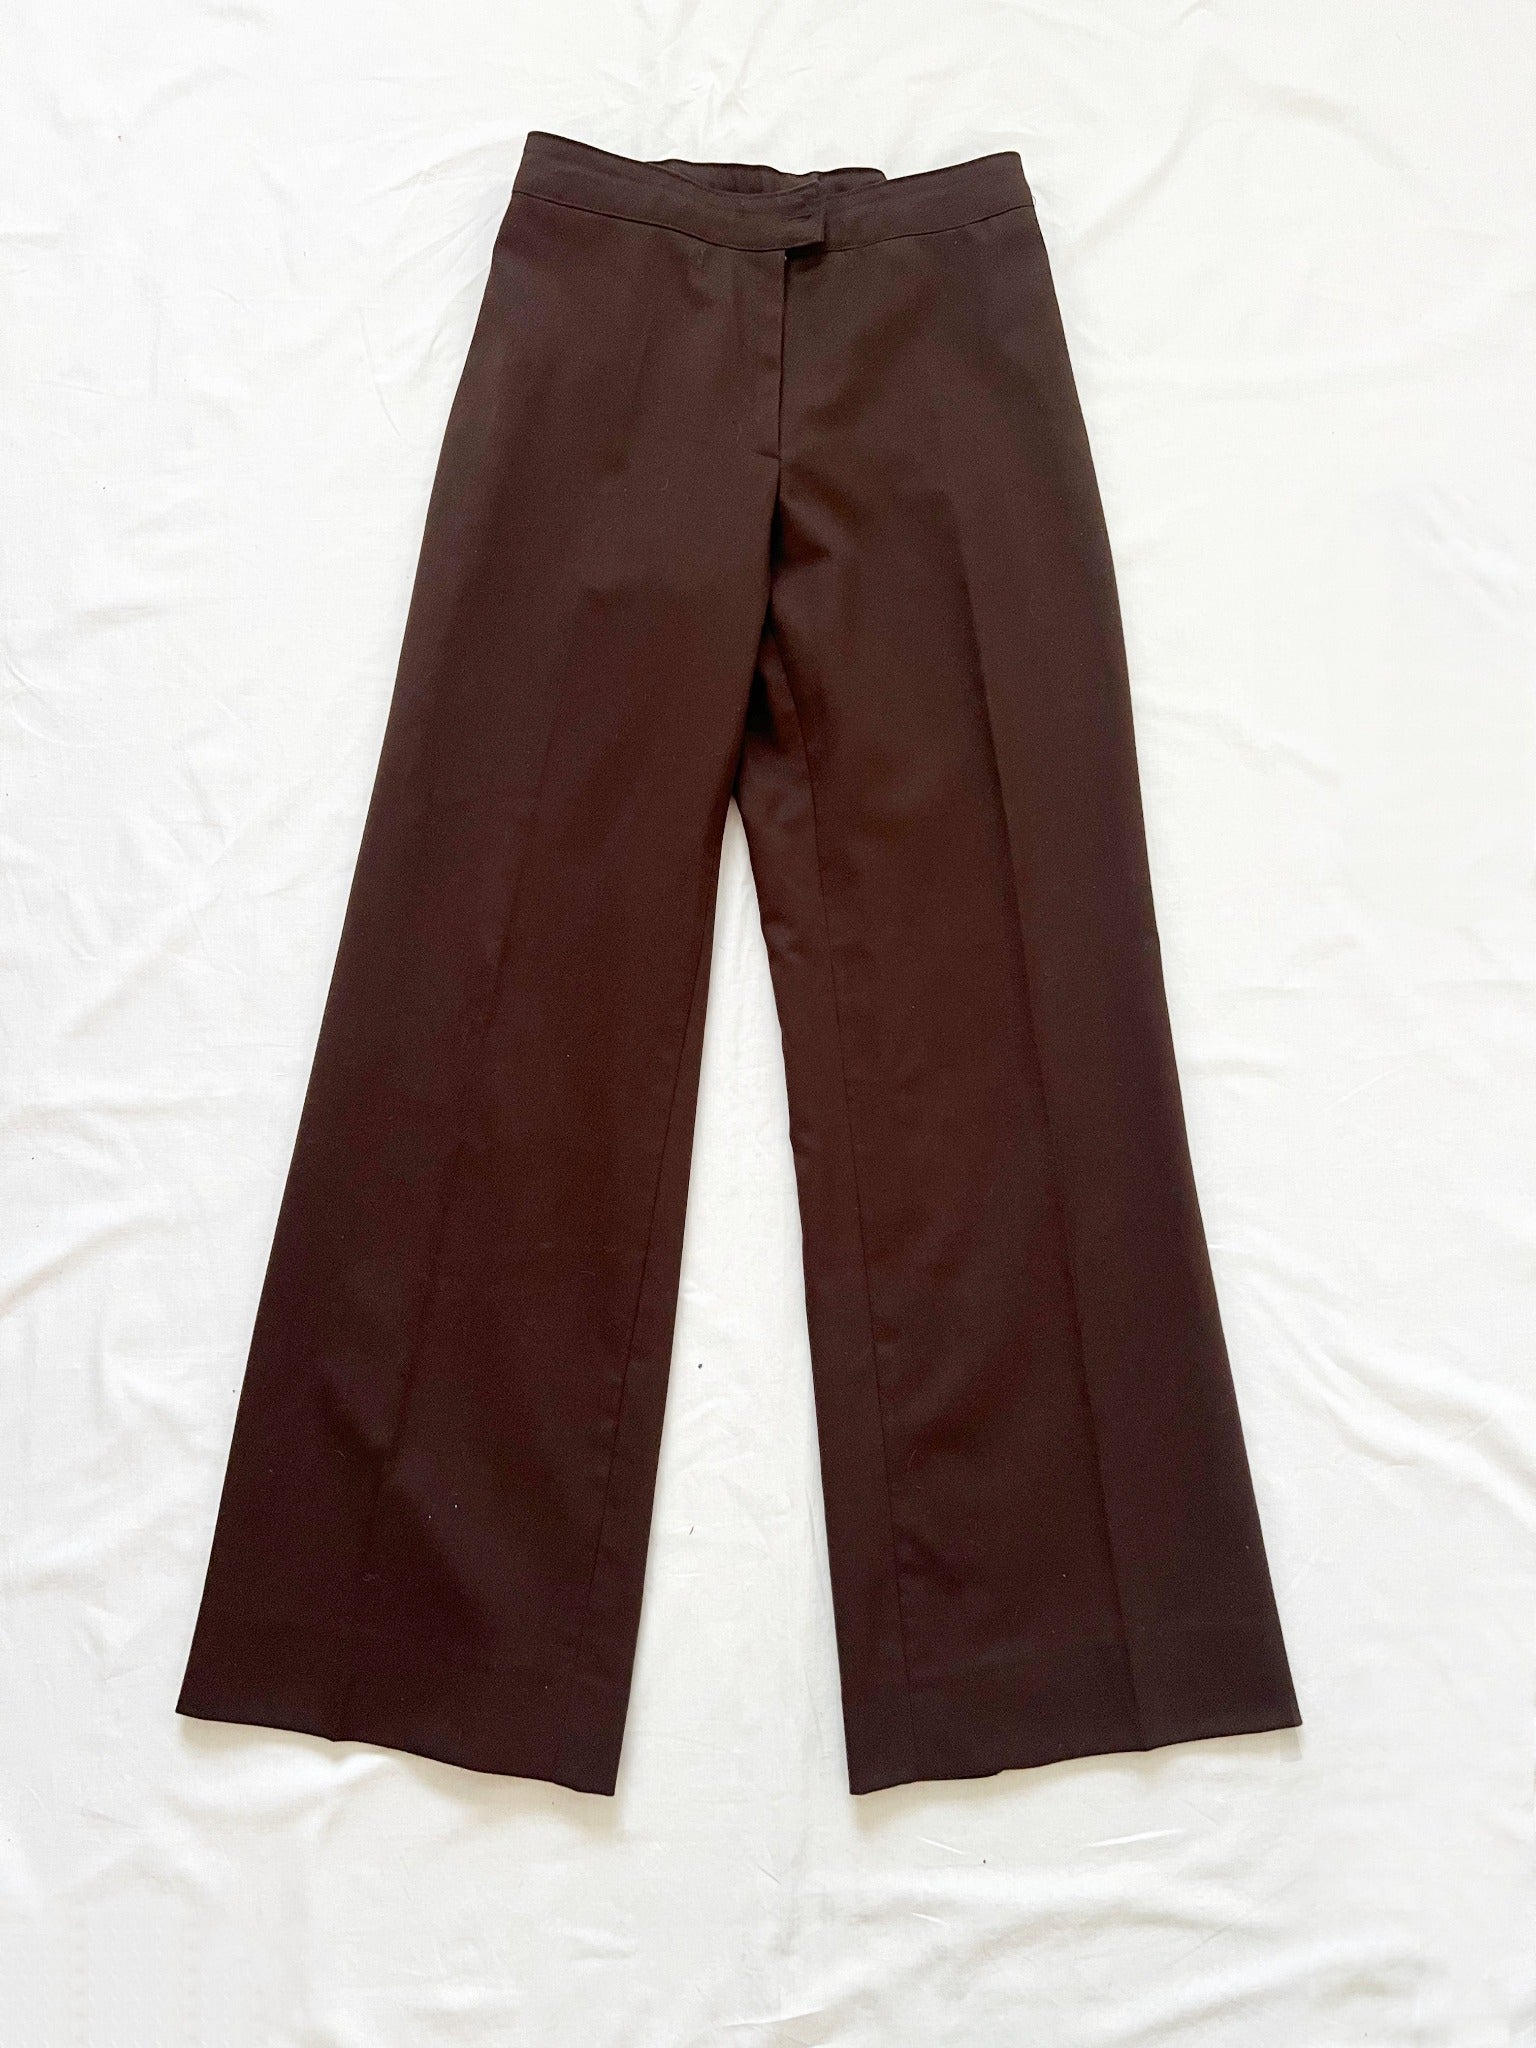 Dark brown pants